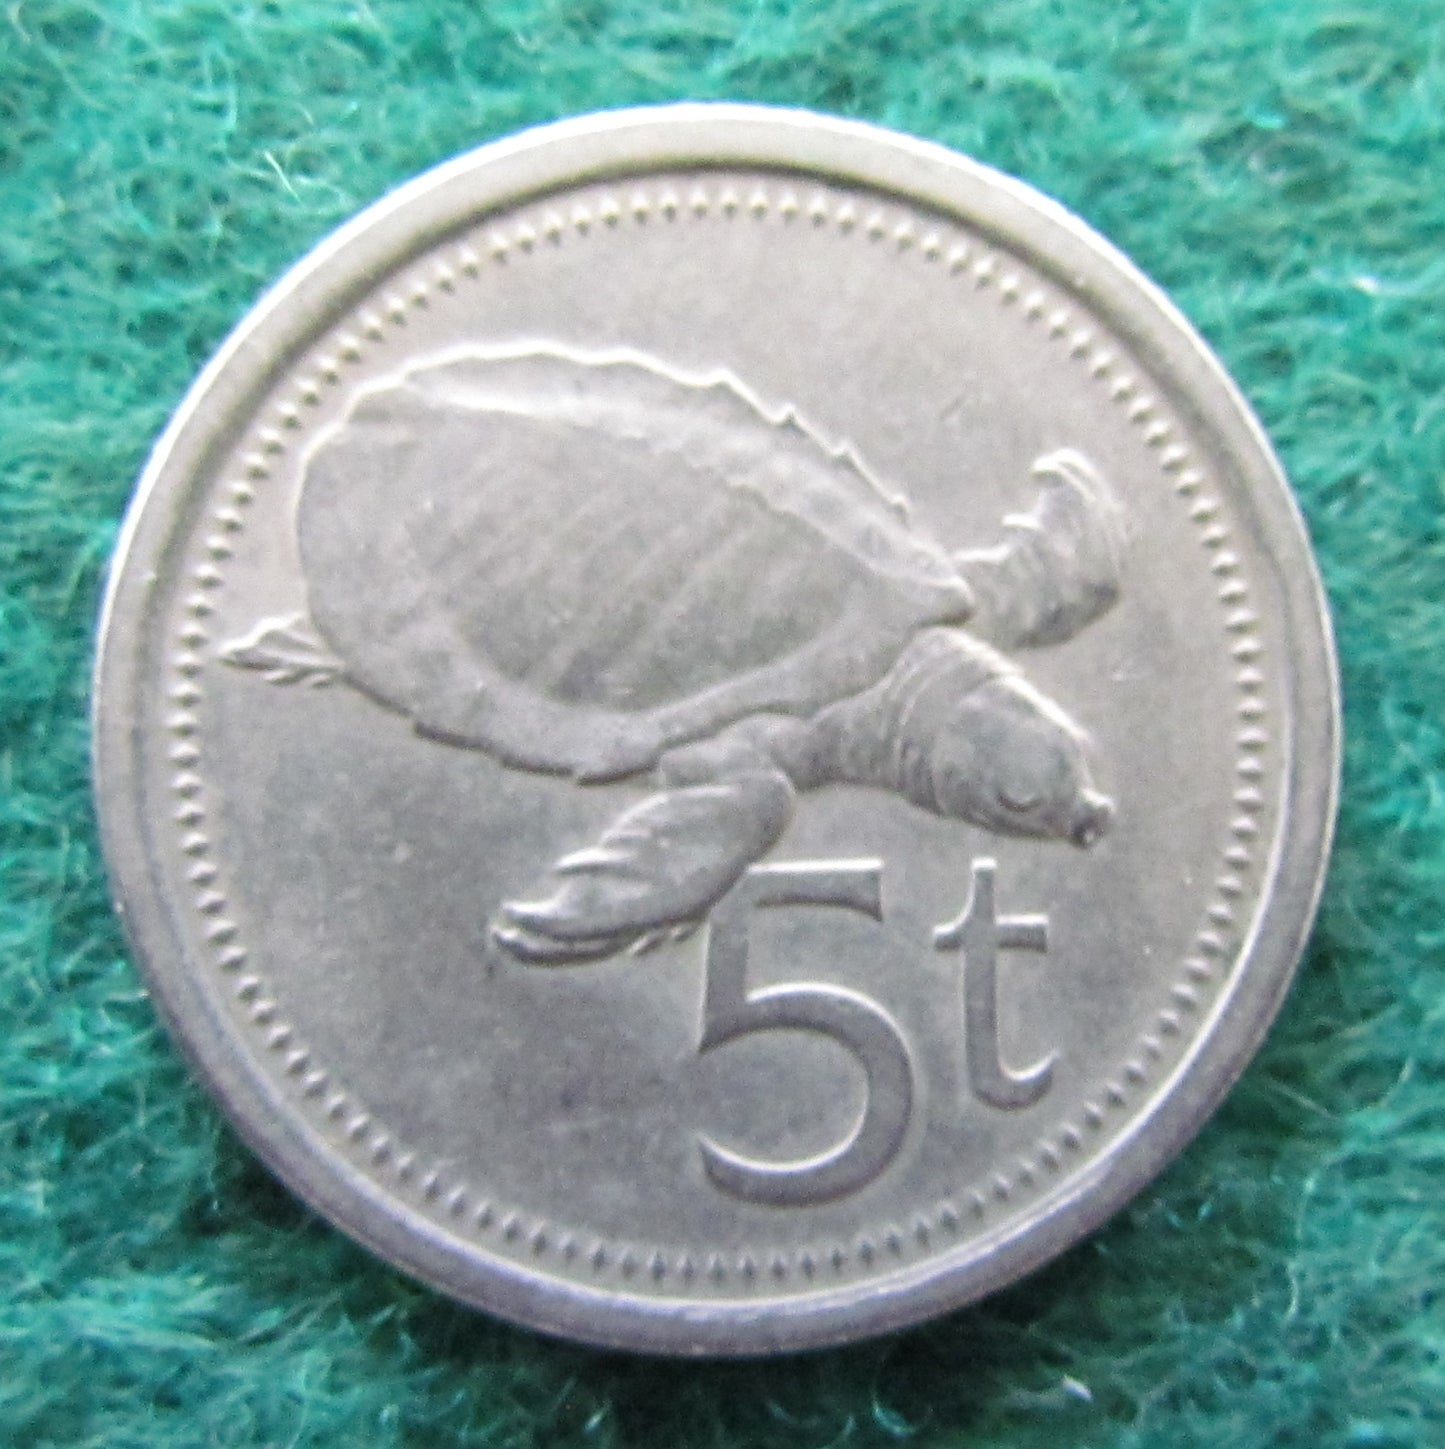 New Guinea 1990 5 Toea Coin - Circulated